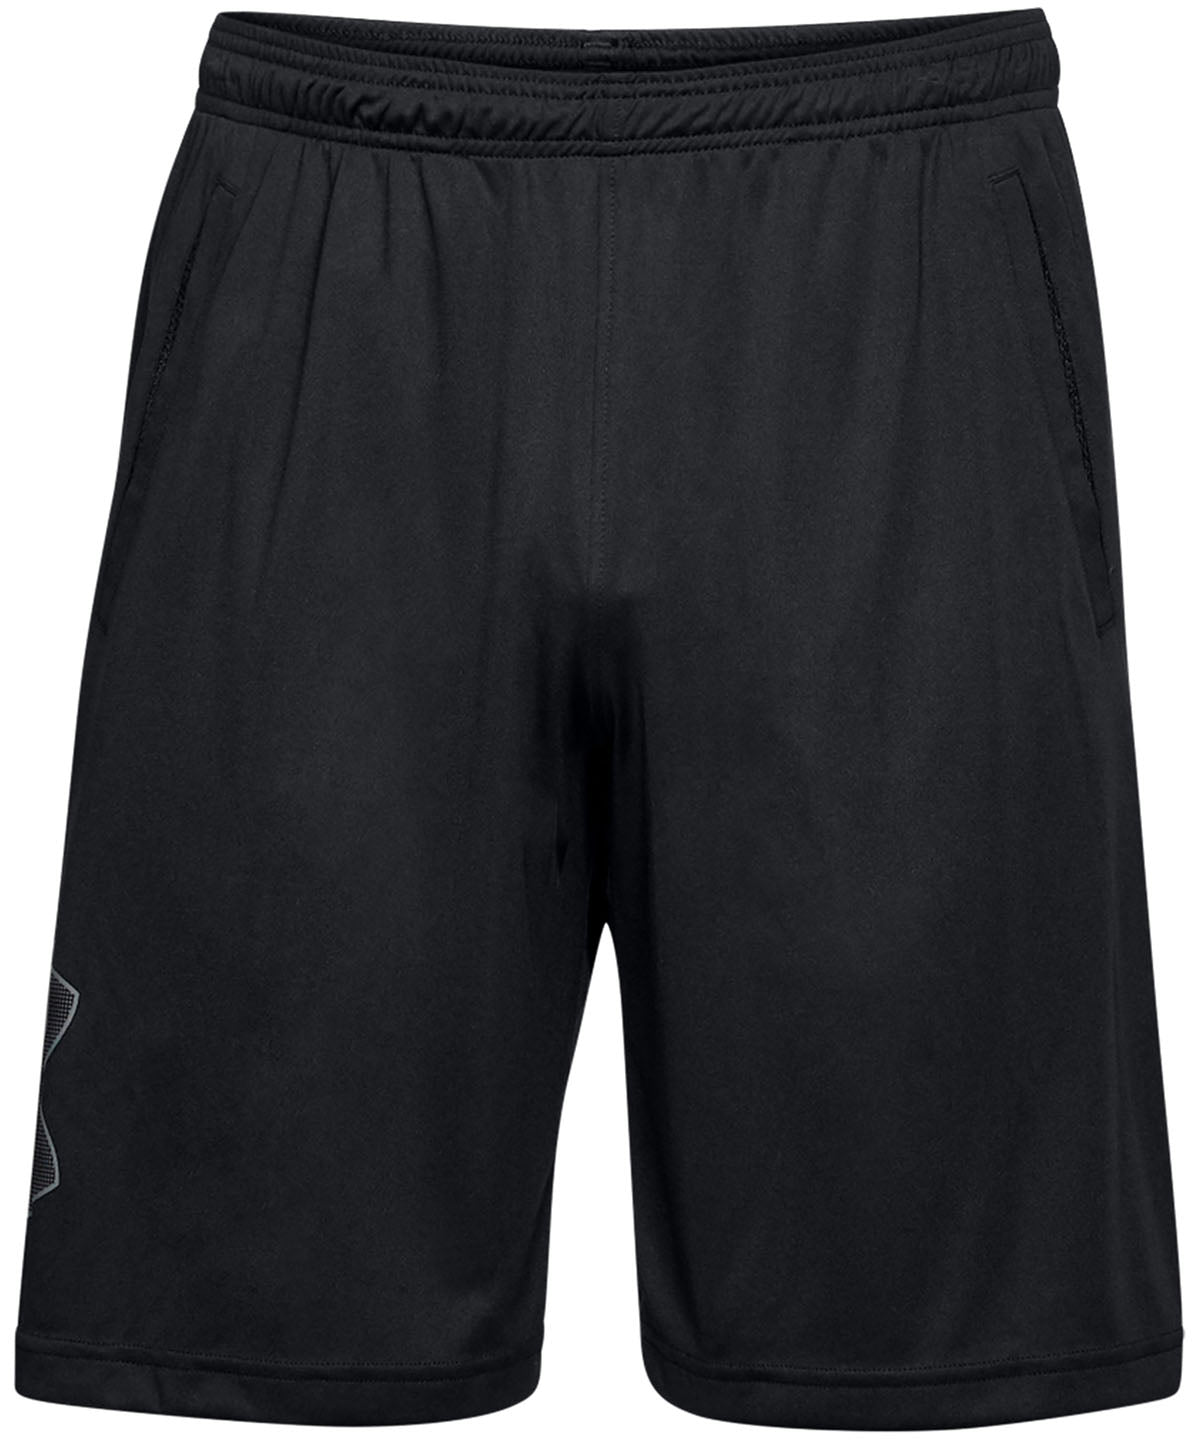 Under Armour Tech™ graphic men's sports shorts